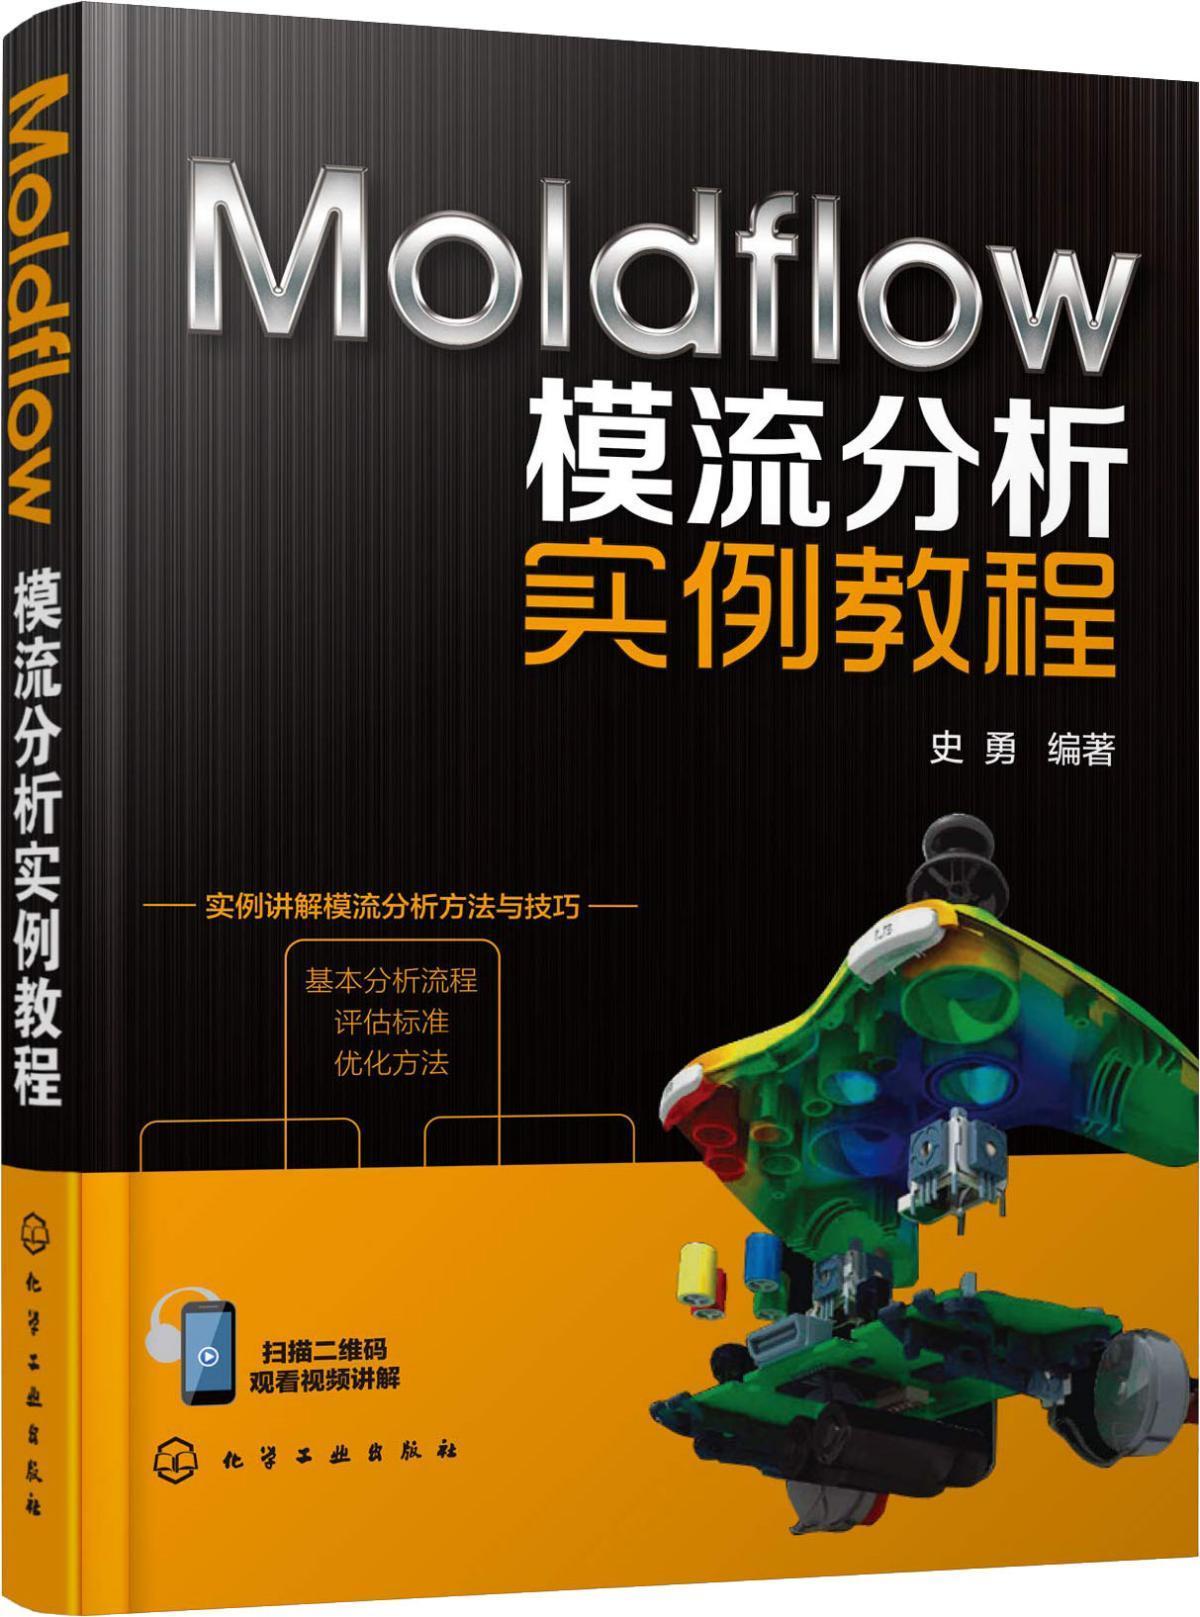 Moldflow模流分析实例教程